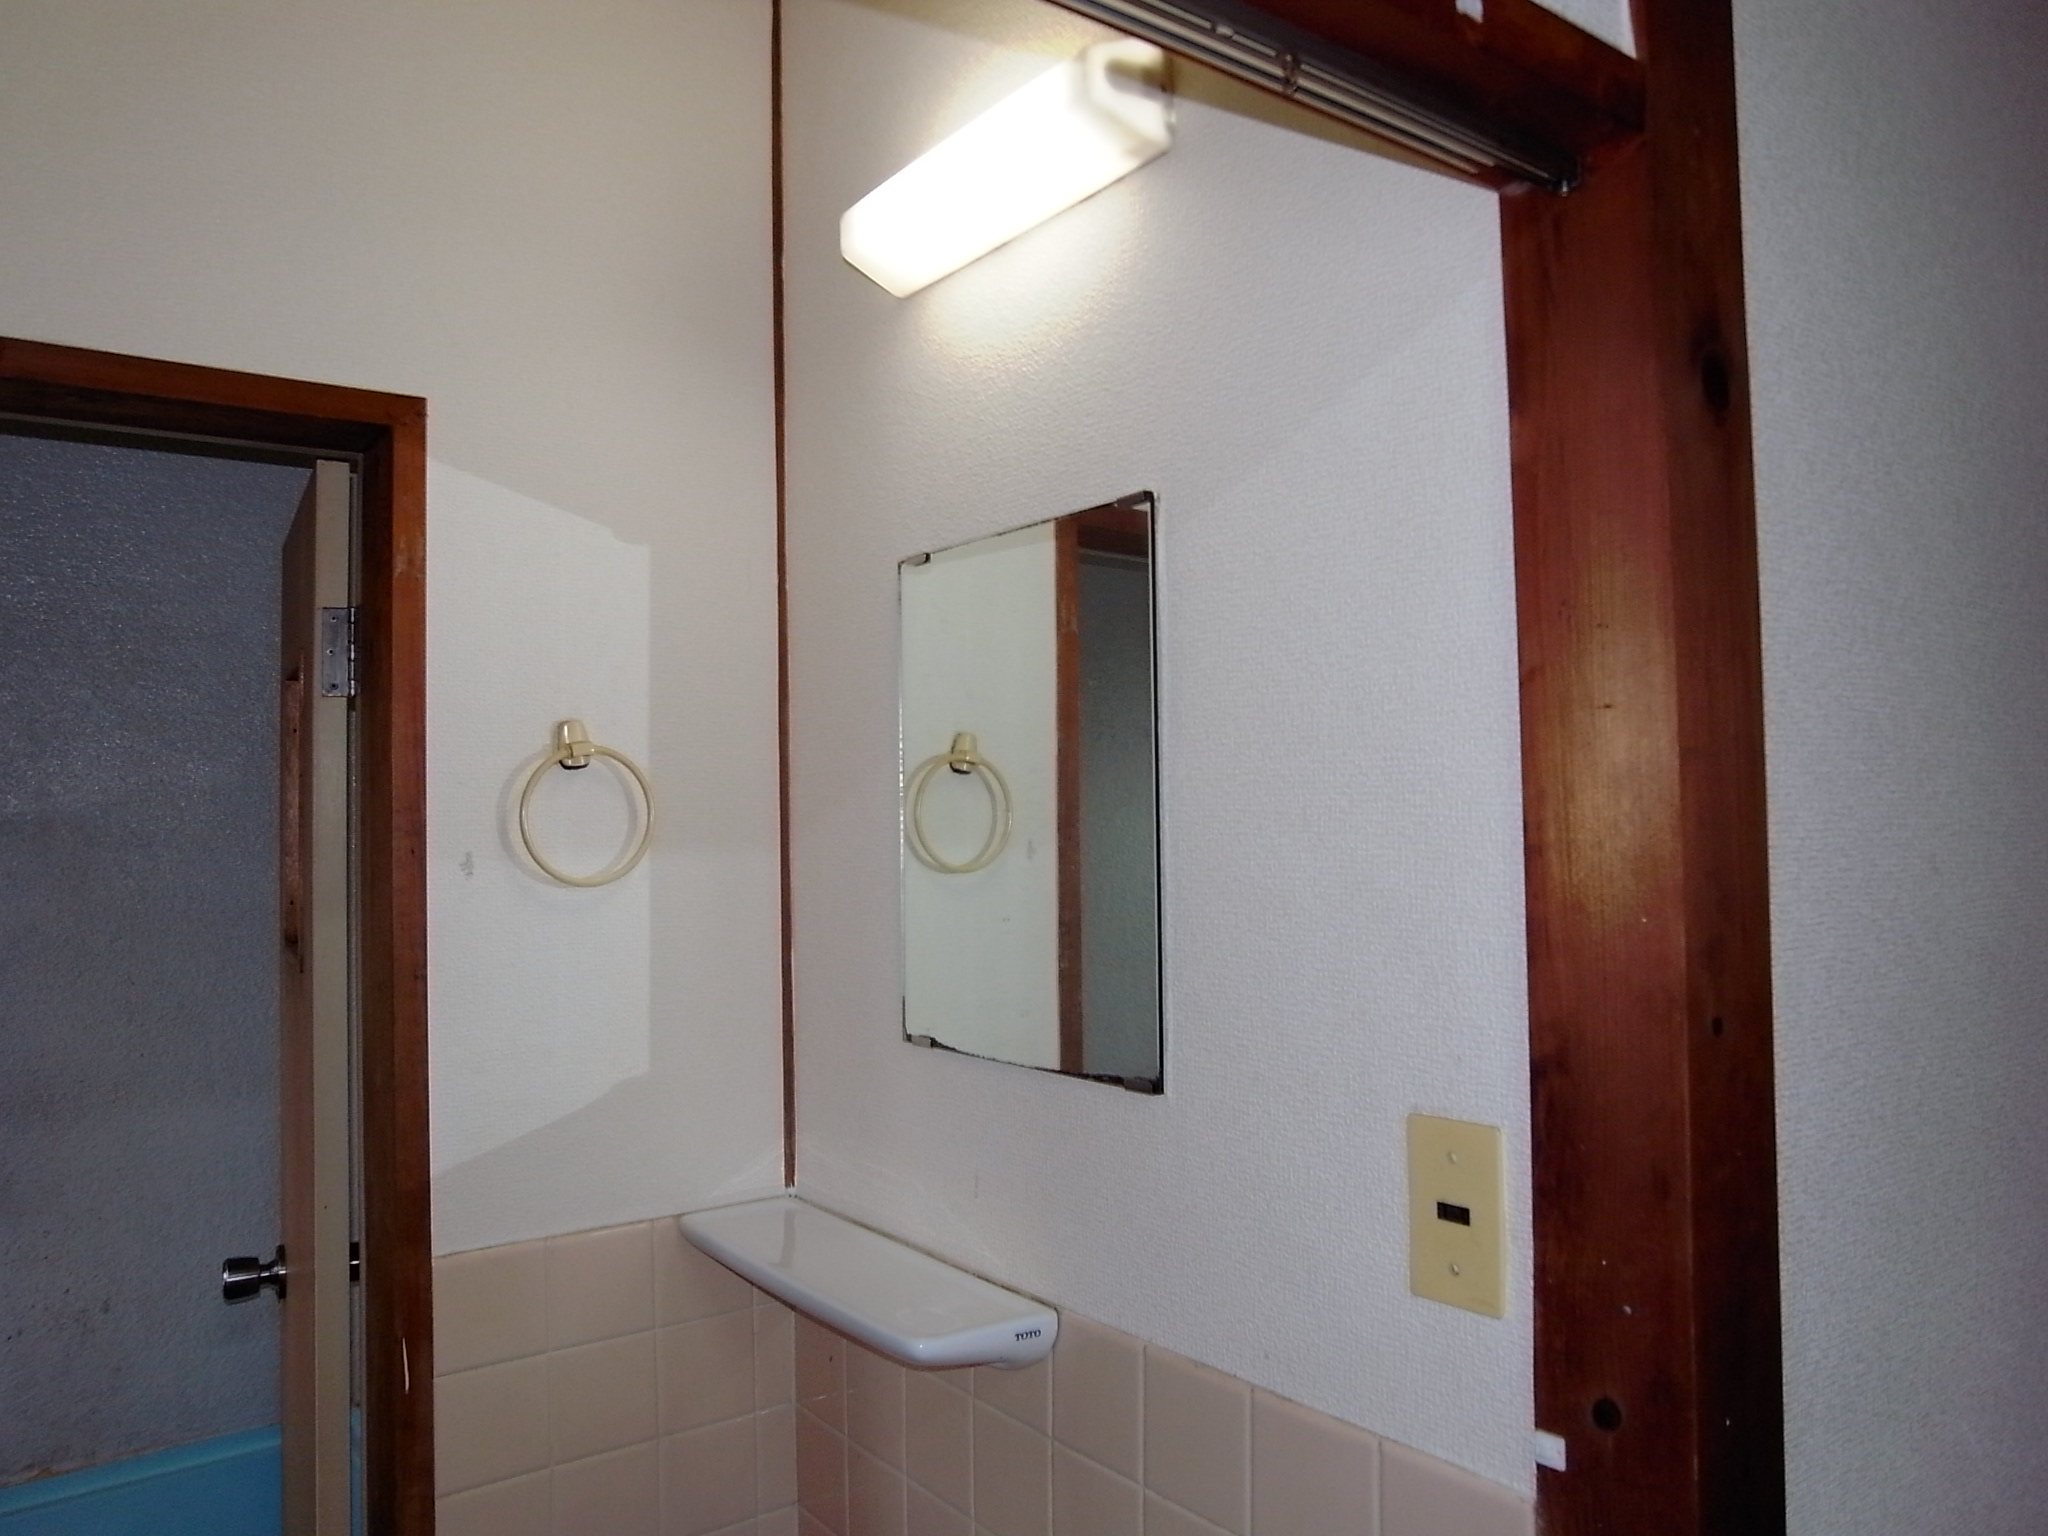 Washroom. There is a mirror in washroom